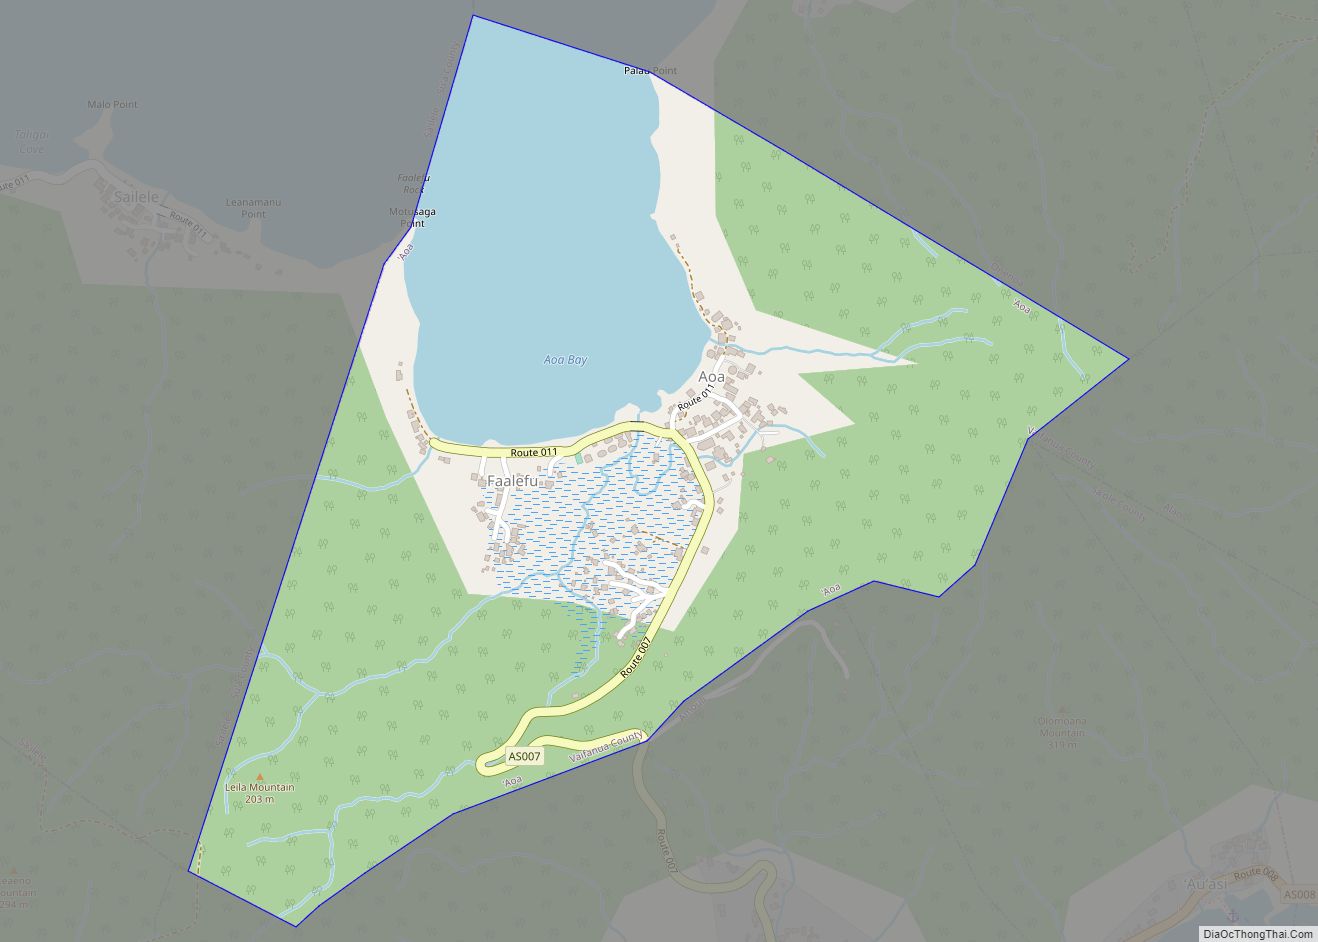 Map of Aoa village